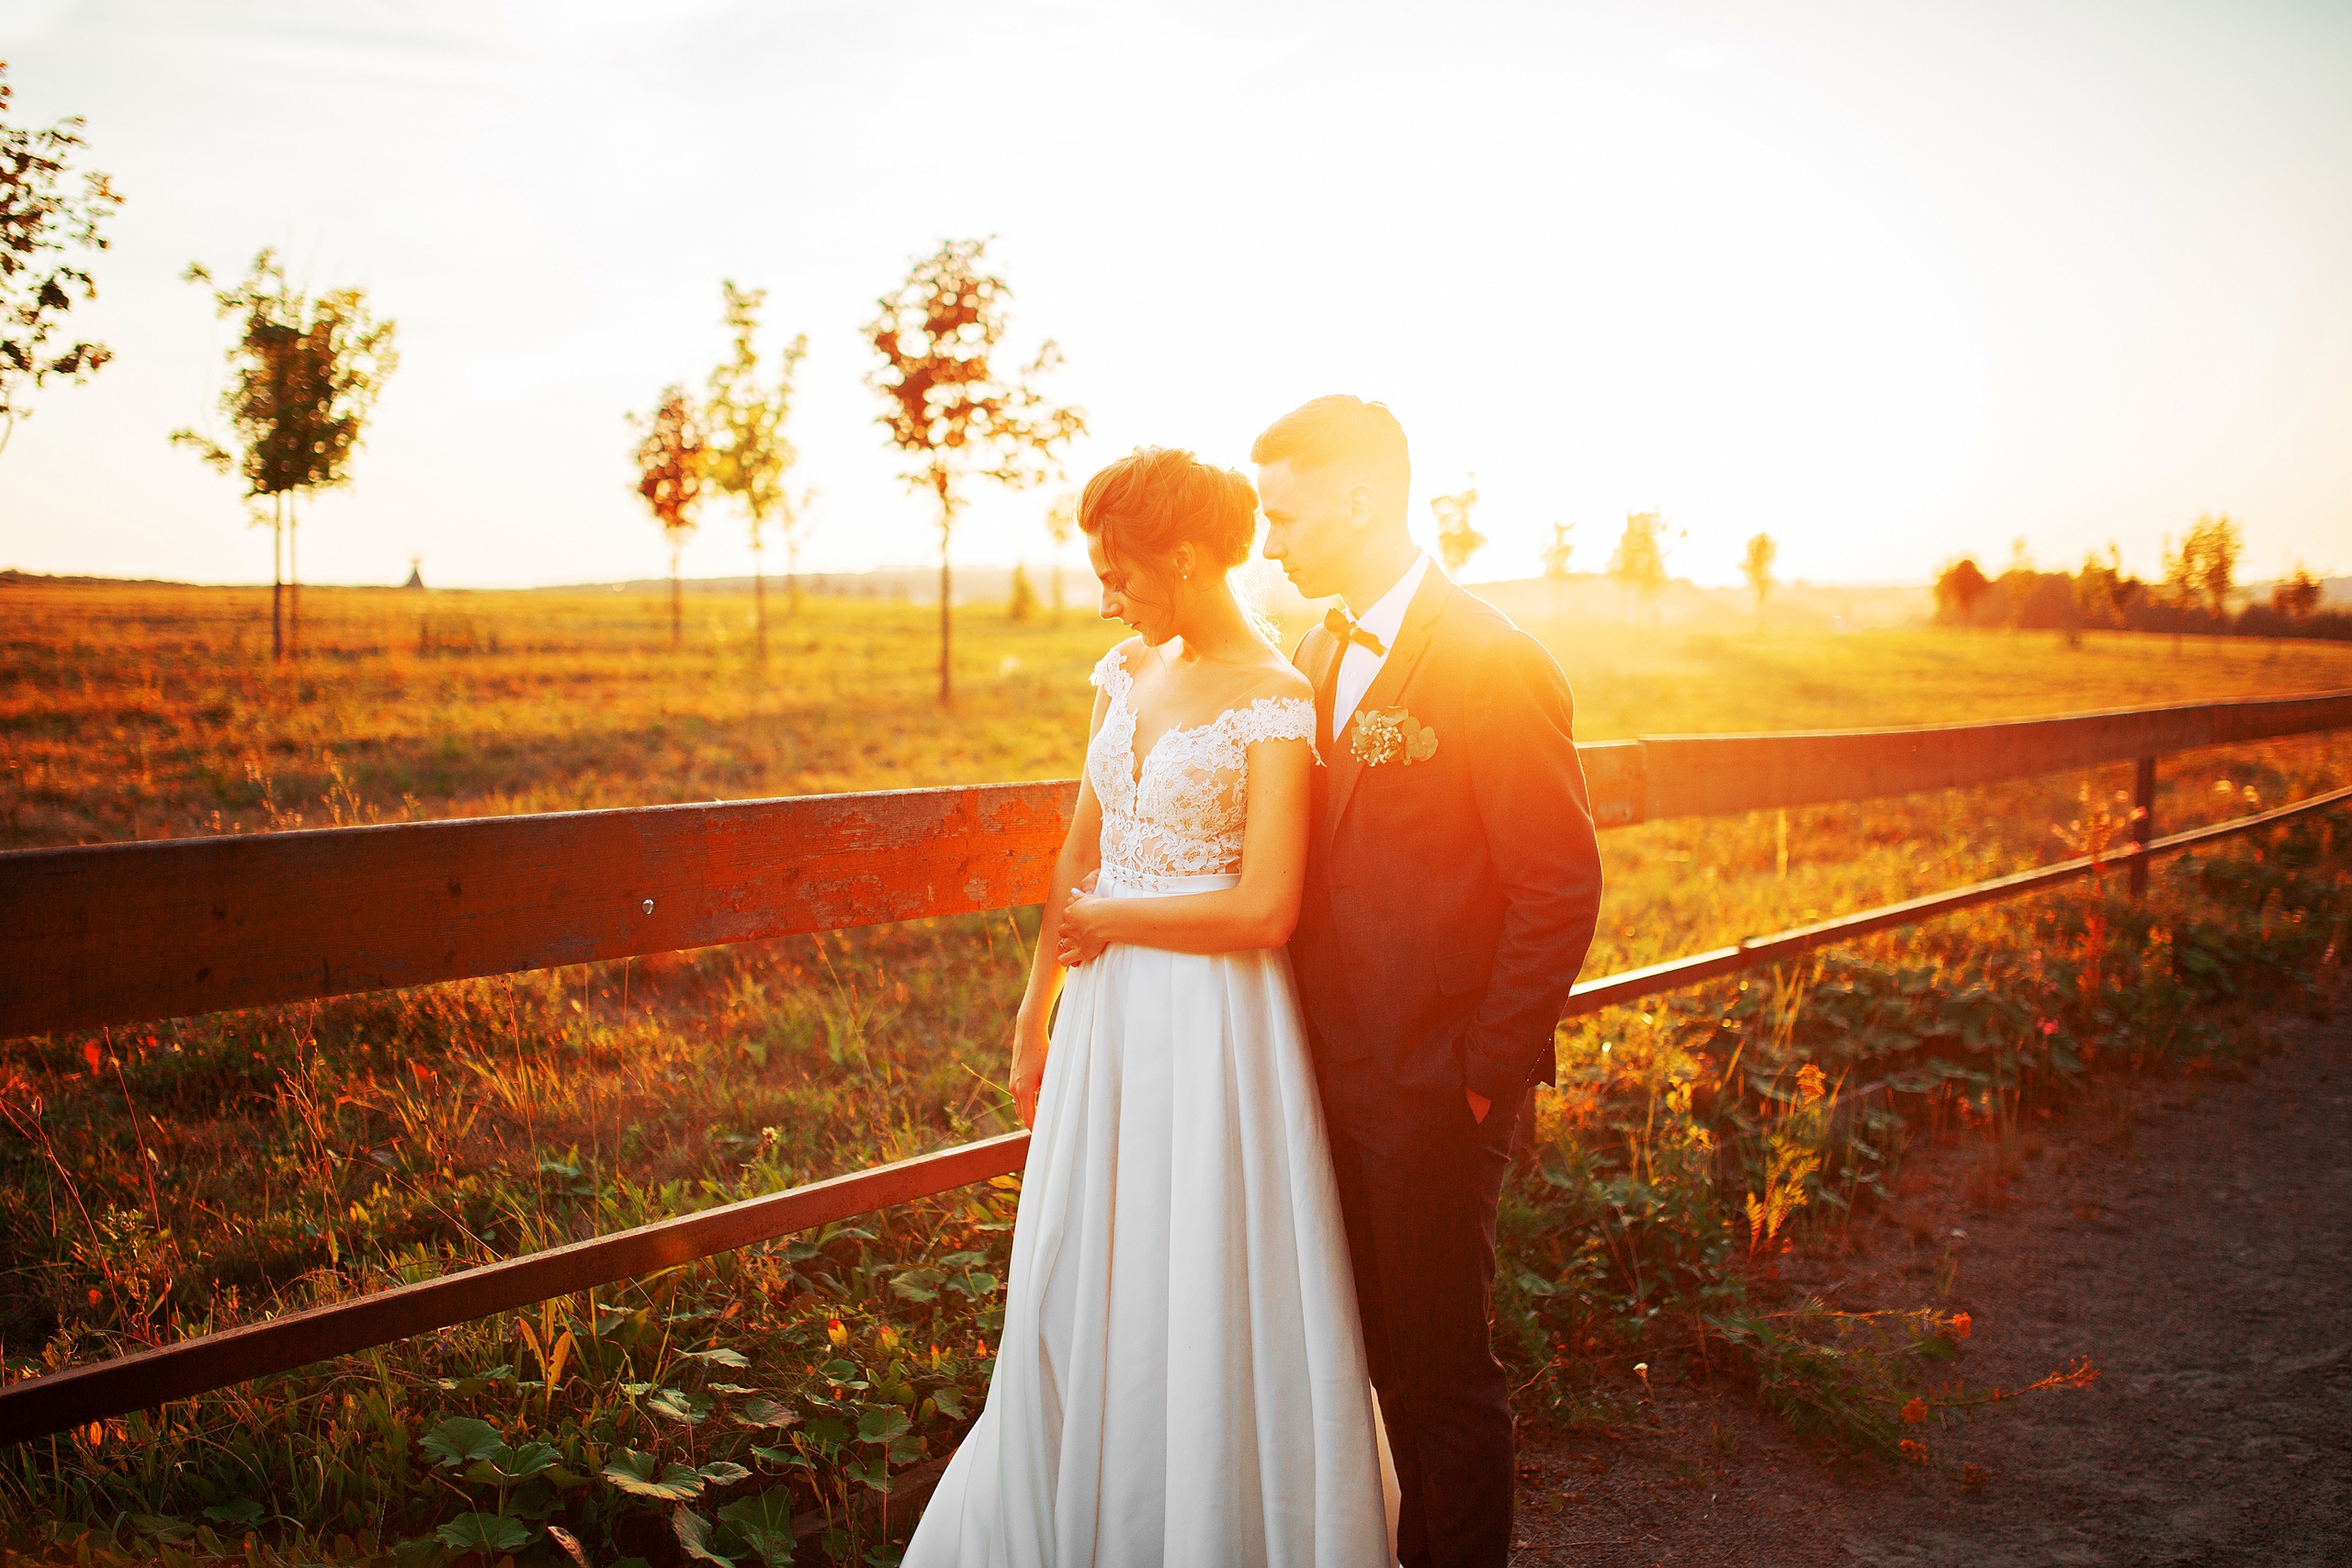 Wedding photo at the sunset